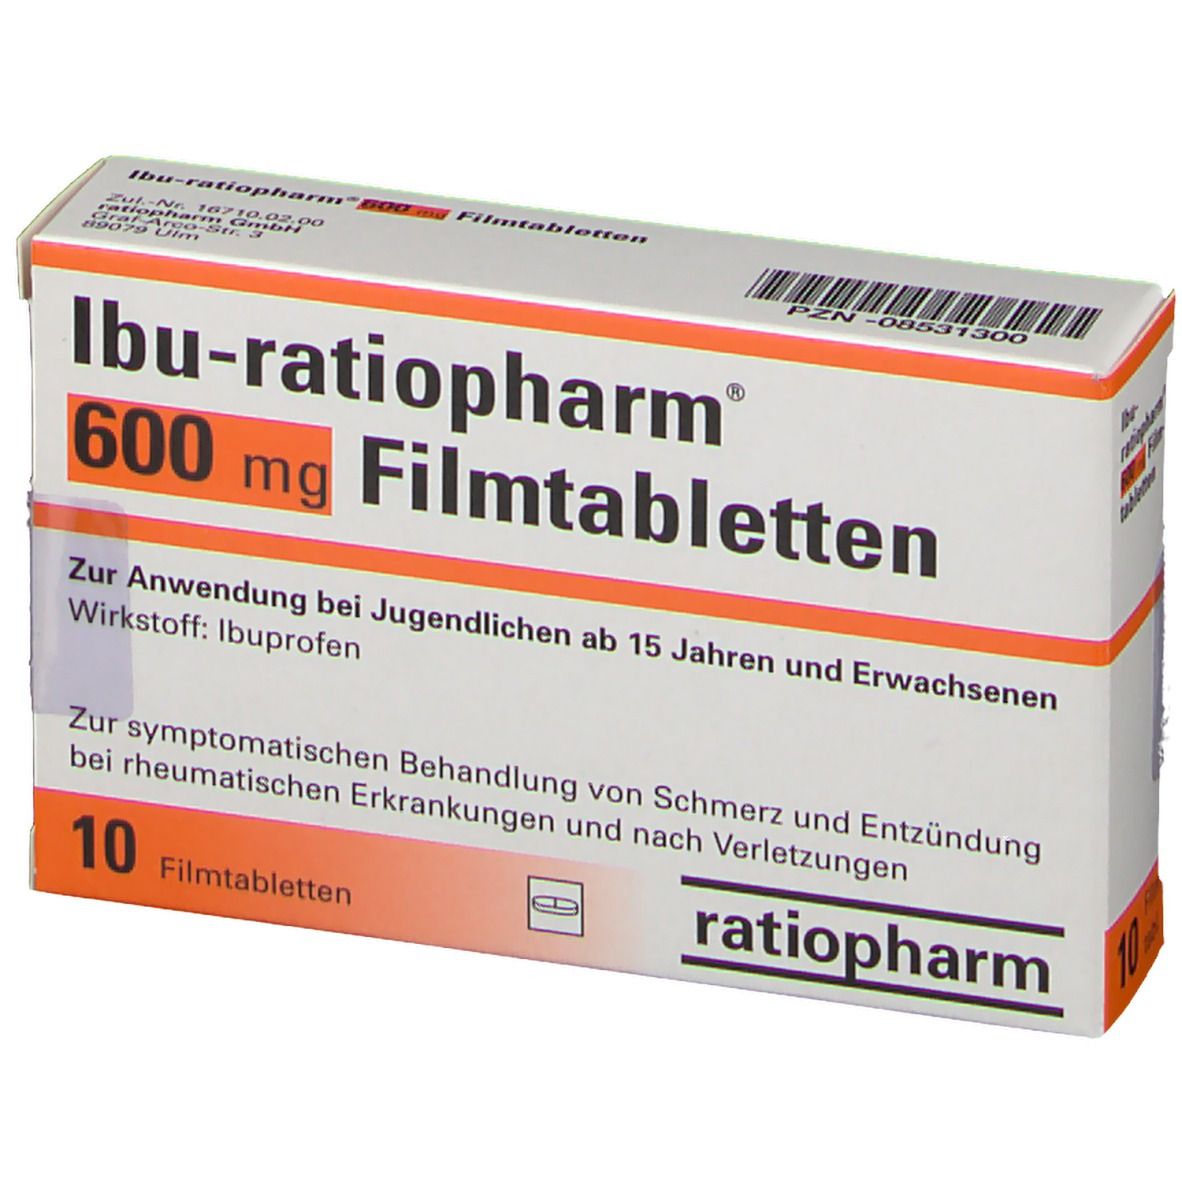 Ibu-ratiopharm® 600 mg